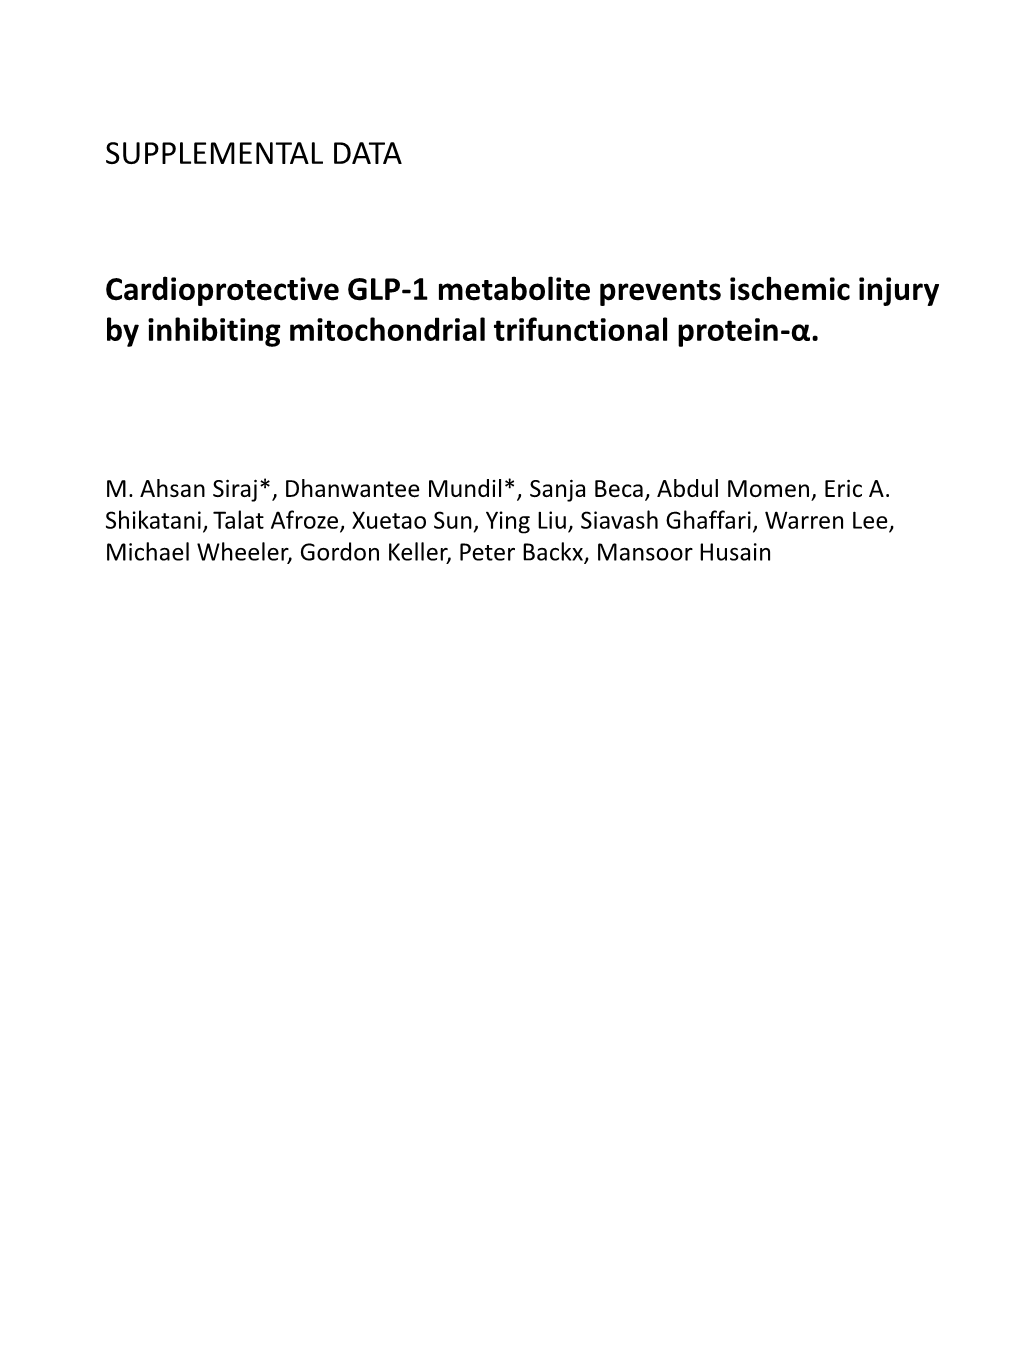 SUPPLEMENTAL DATA Cardioprotective GLP-1